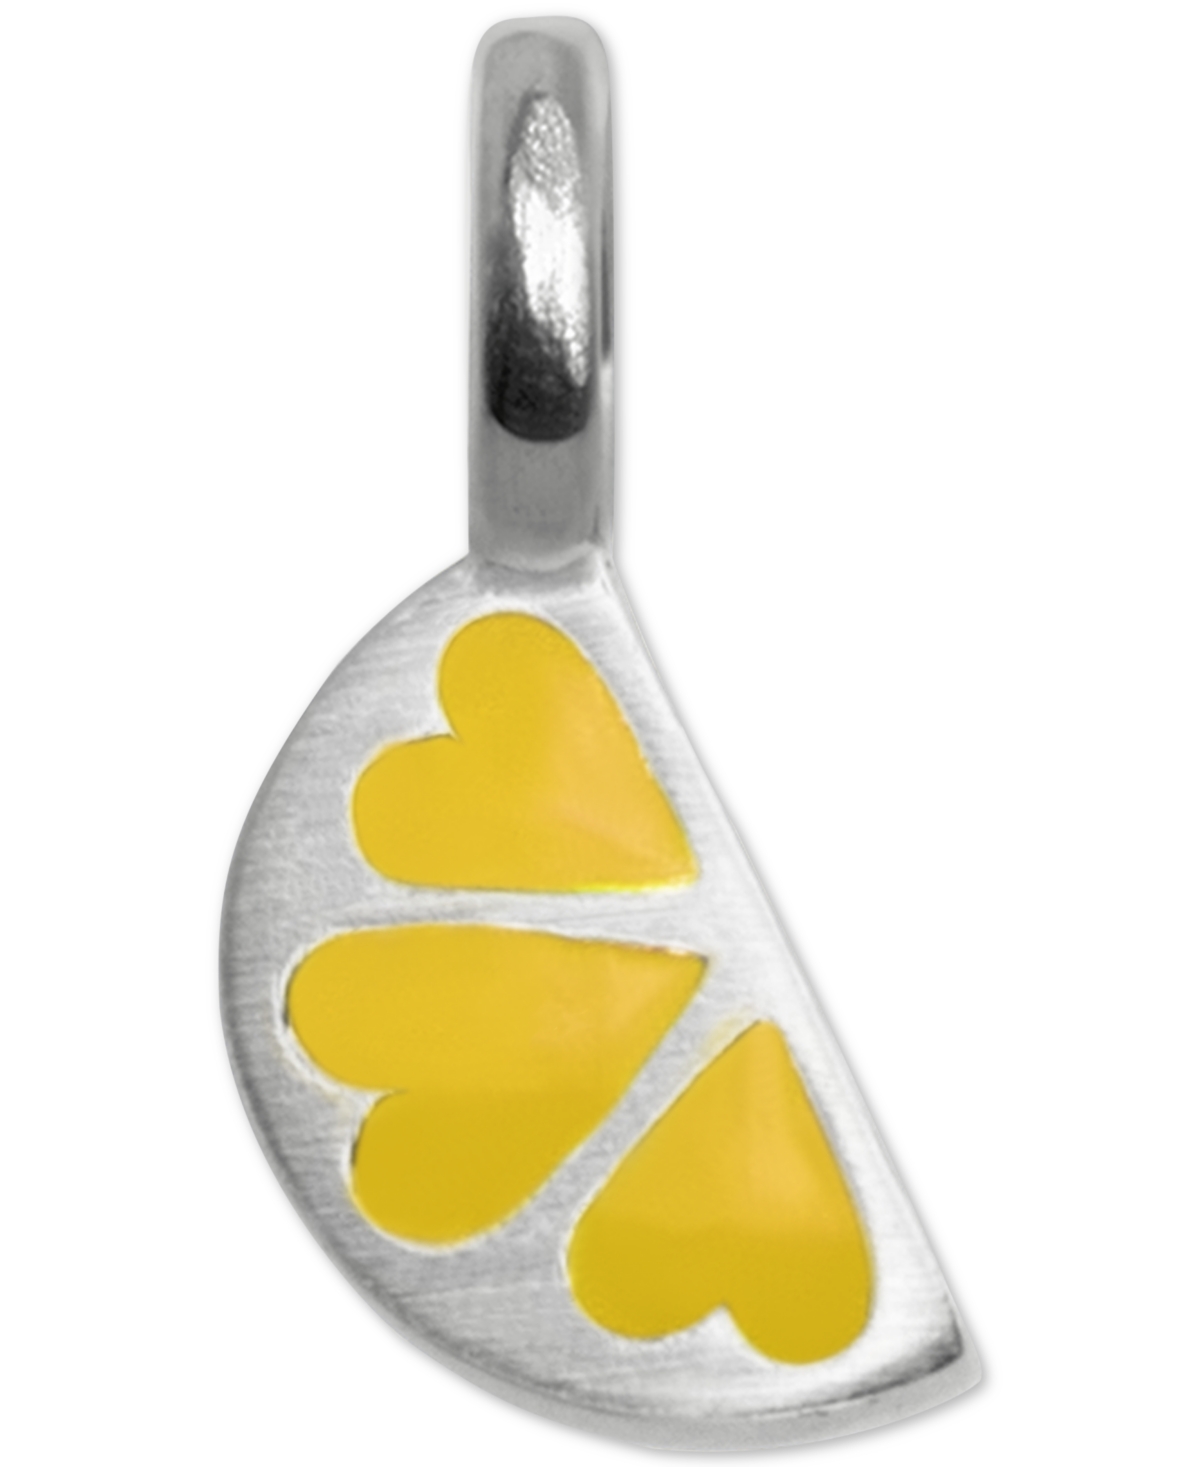 Mini Lemon Slice Charm in Sterling Silver - Sterling Silver